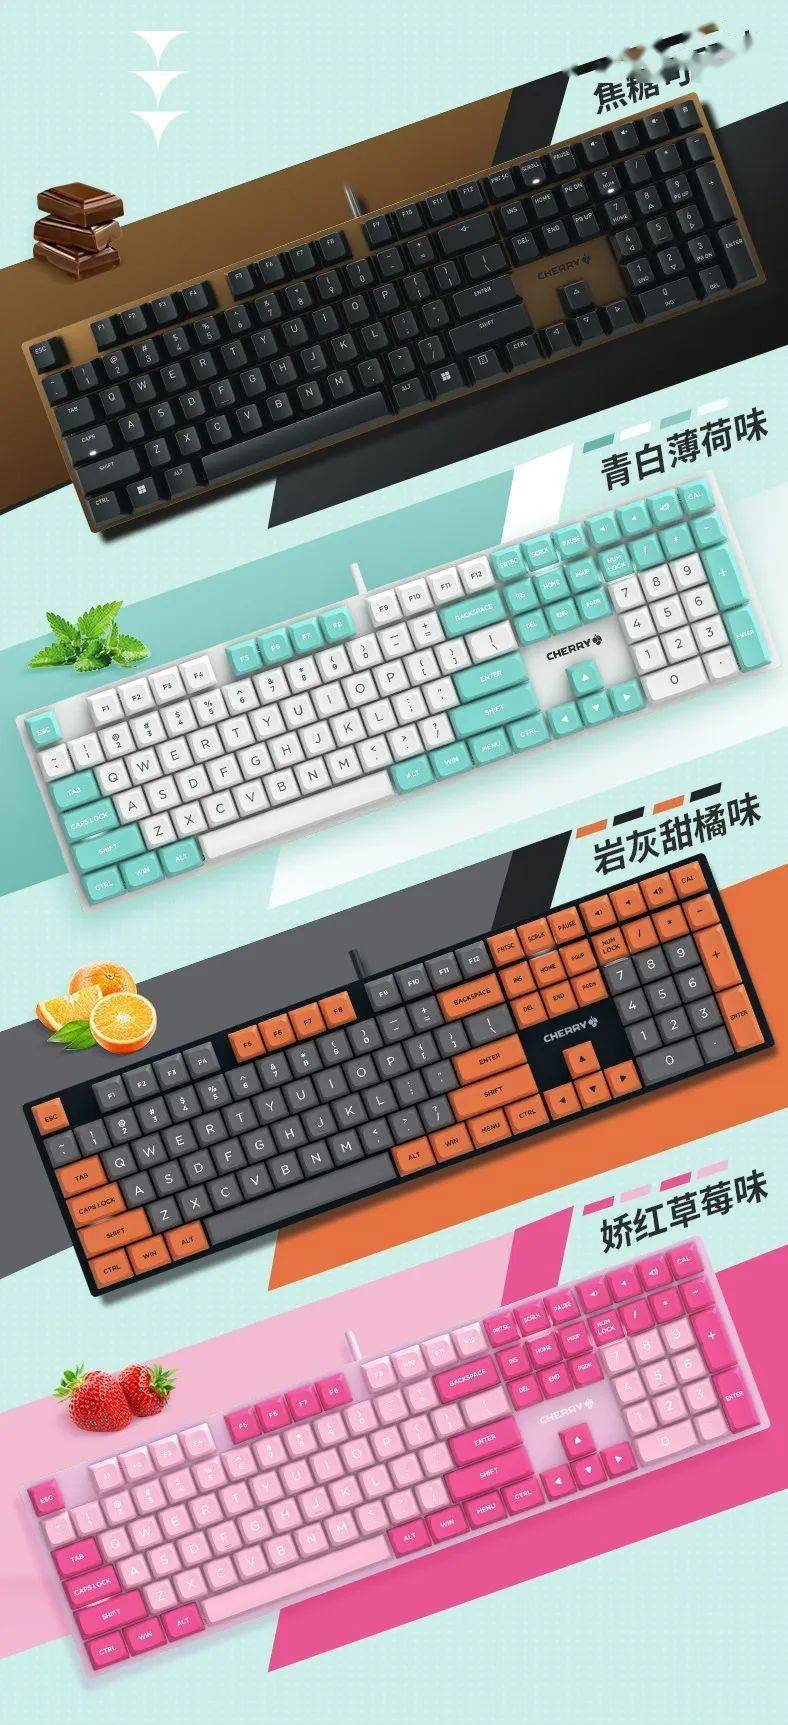 CHERRY 推出 KC200 MX 键盘：糖果配色，售价 629 元